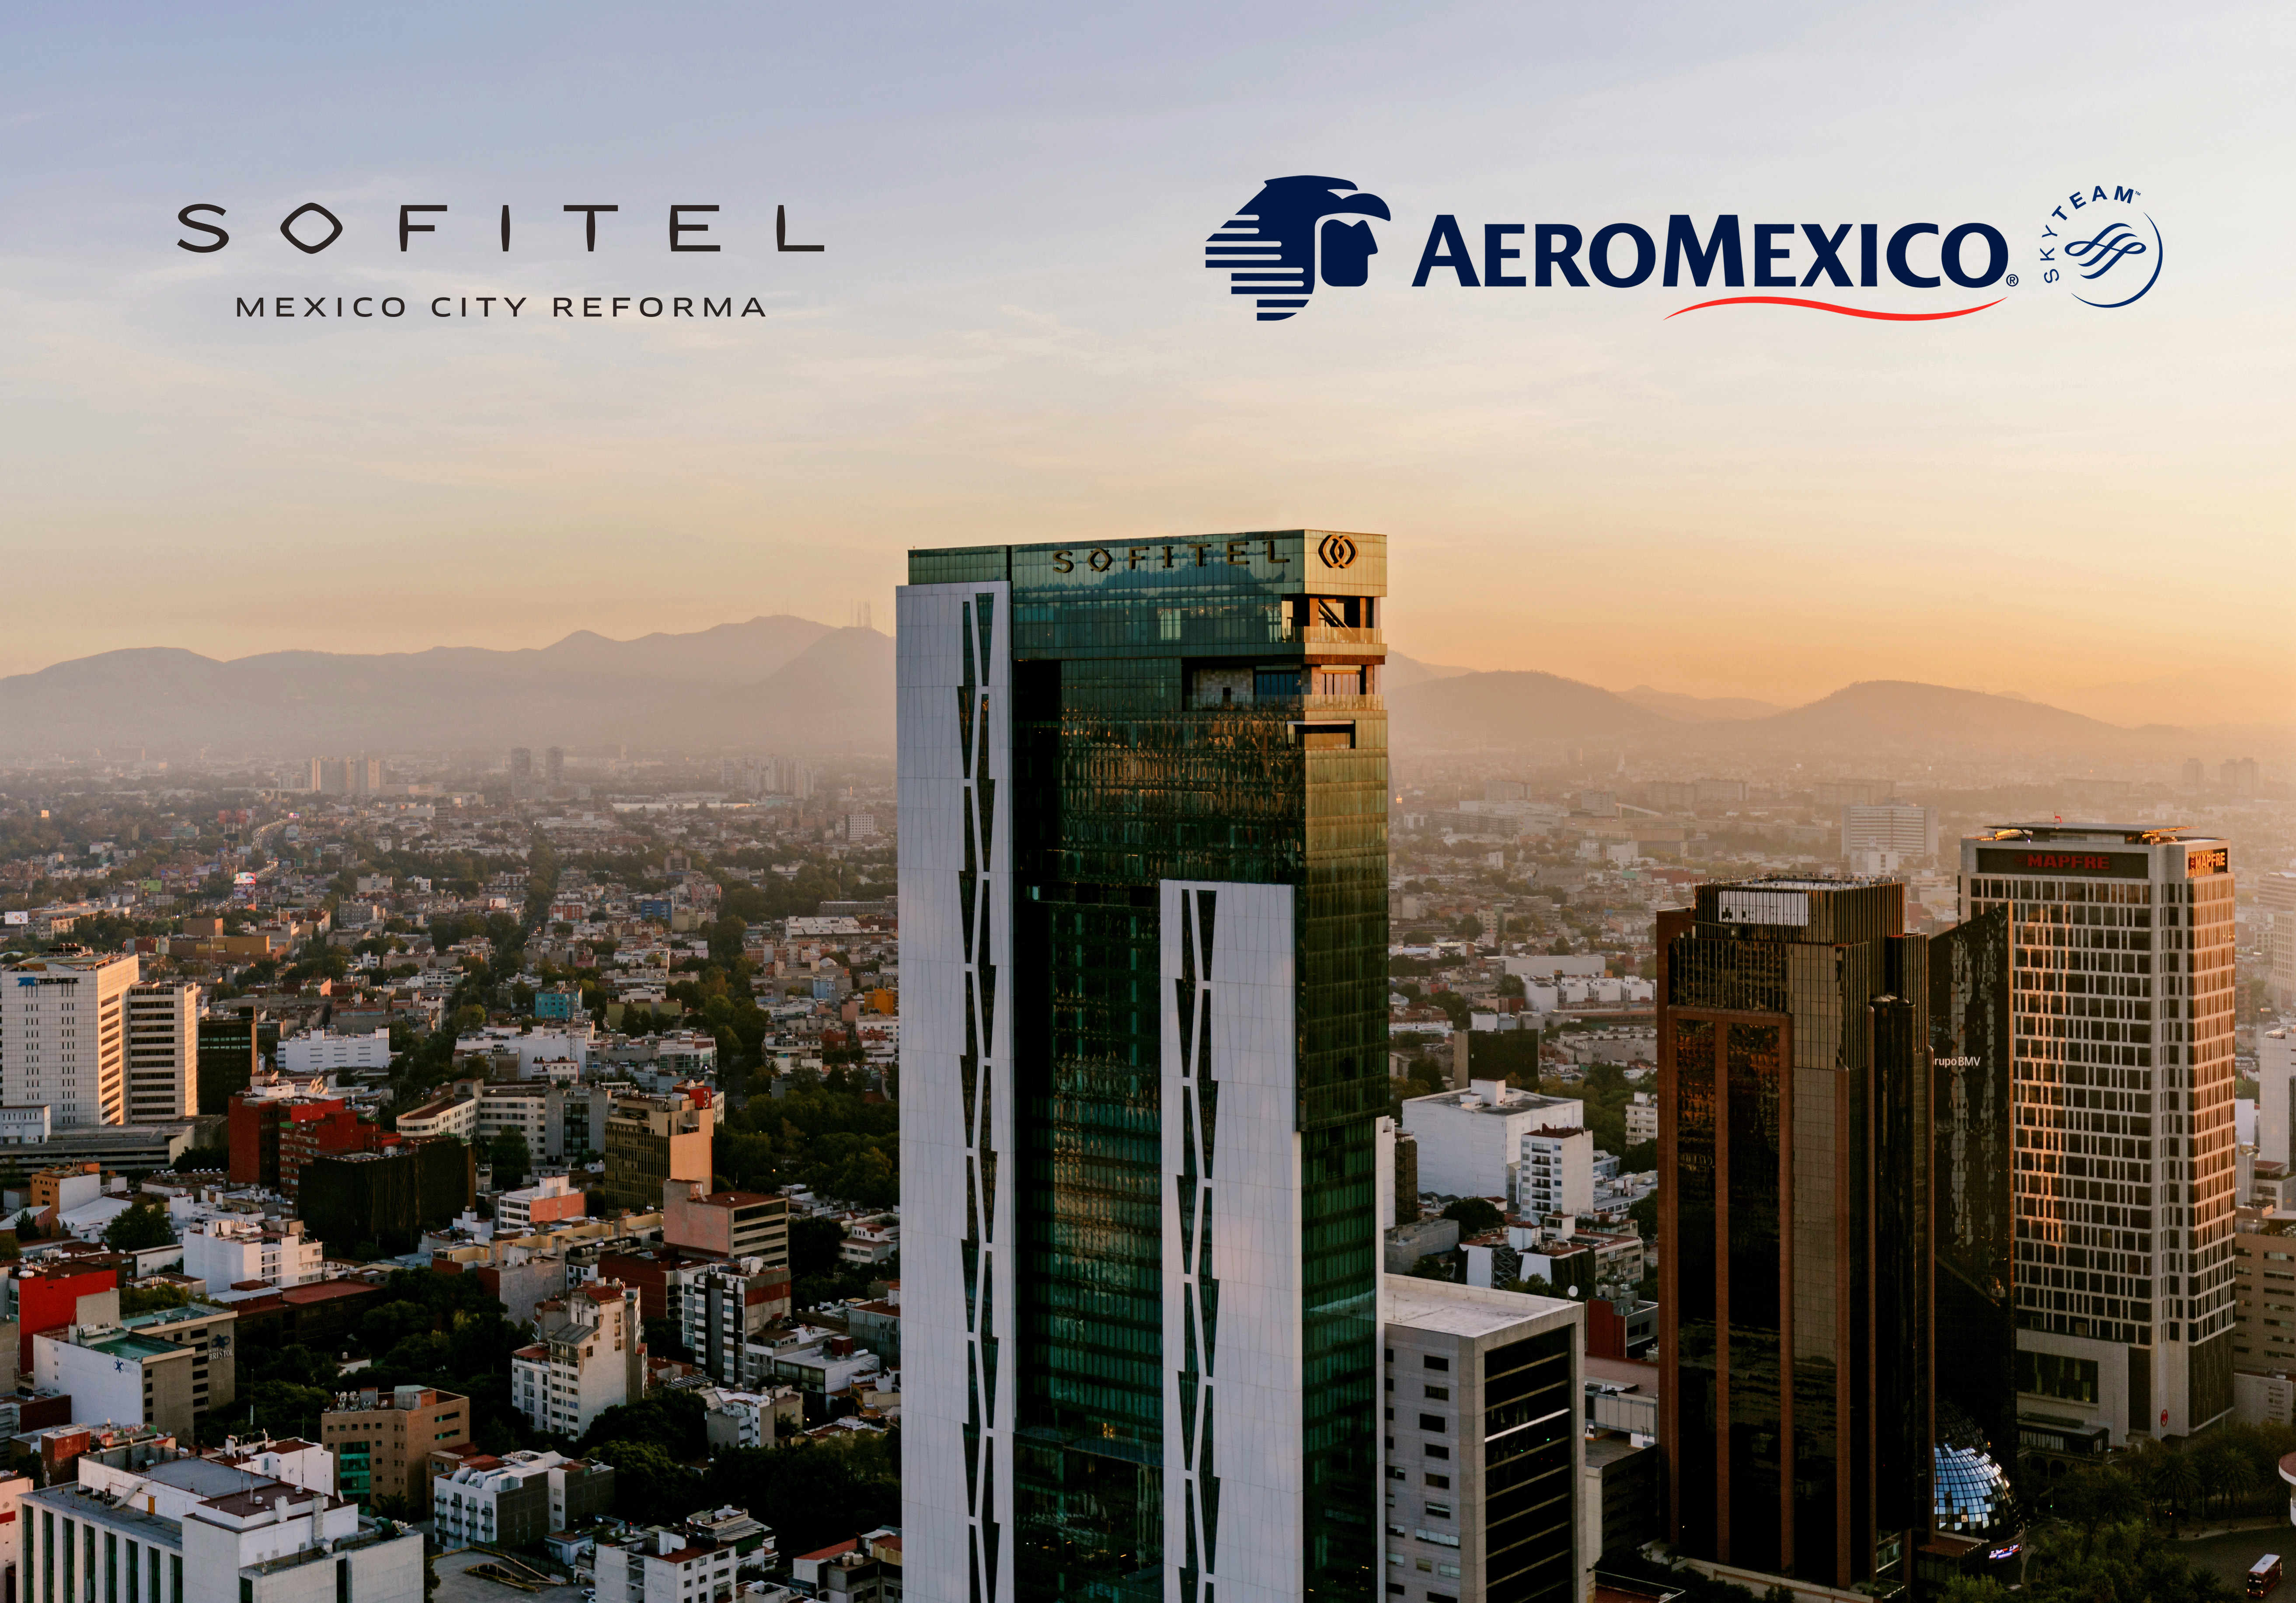 Photo of the hotel Sofitel Mexico City Reforma: Sofitel aeromexico 021